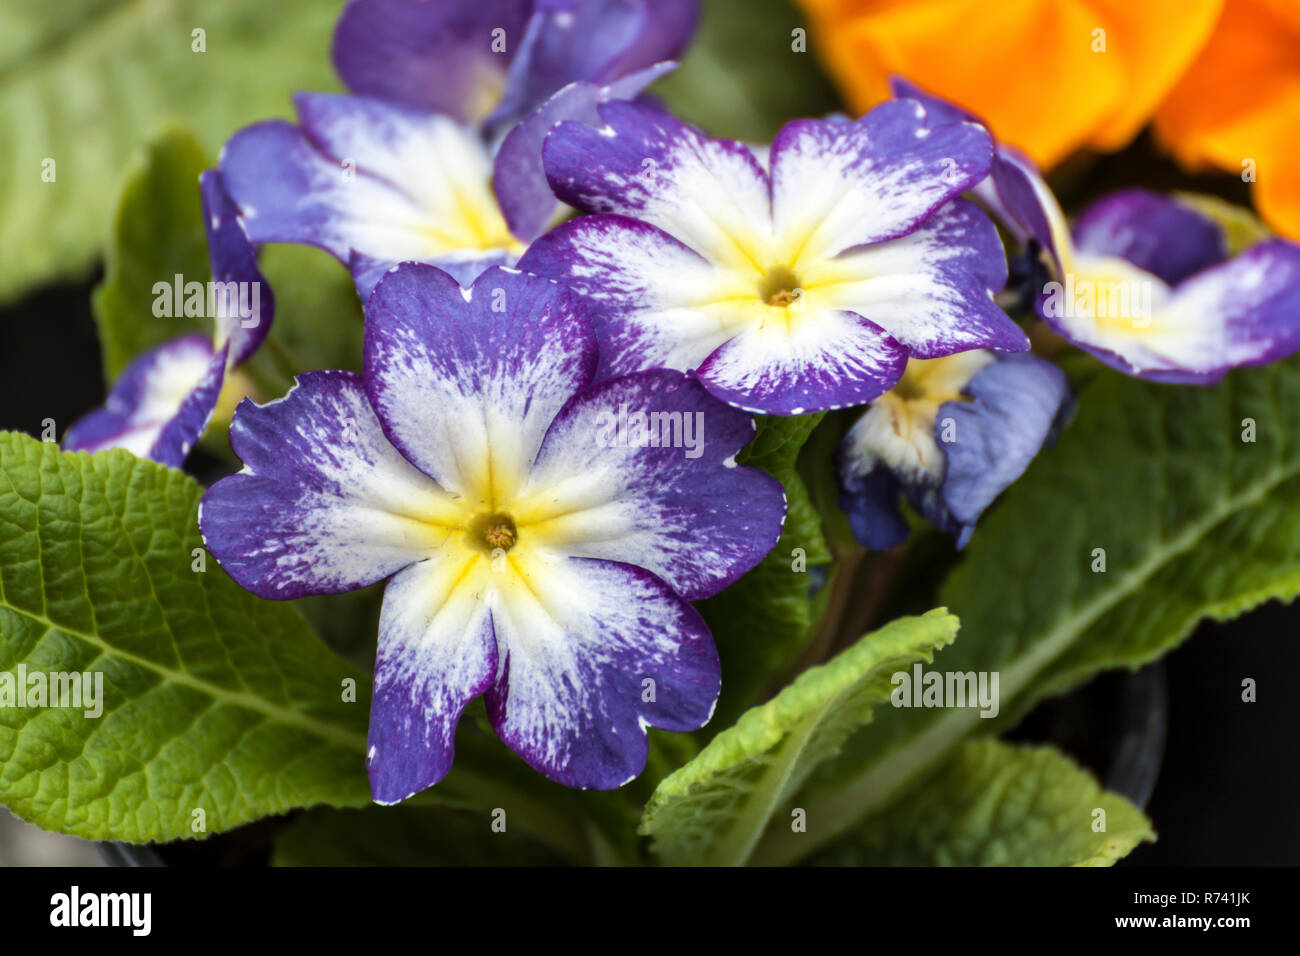 Violet primrose flower in a pot Stock Photo